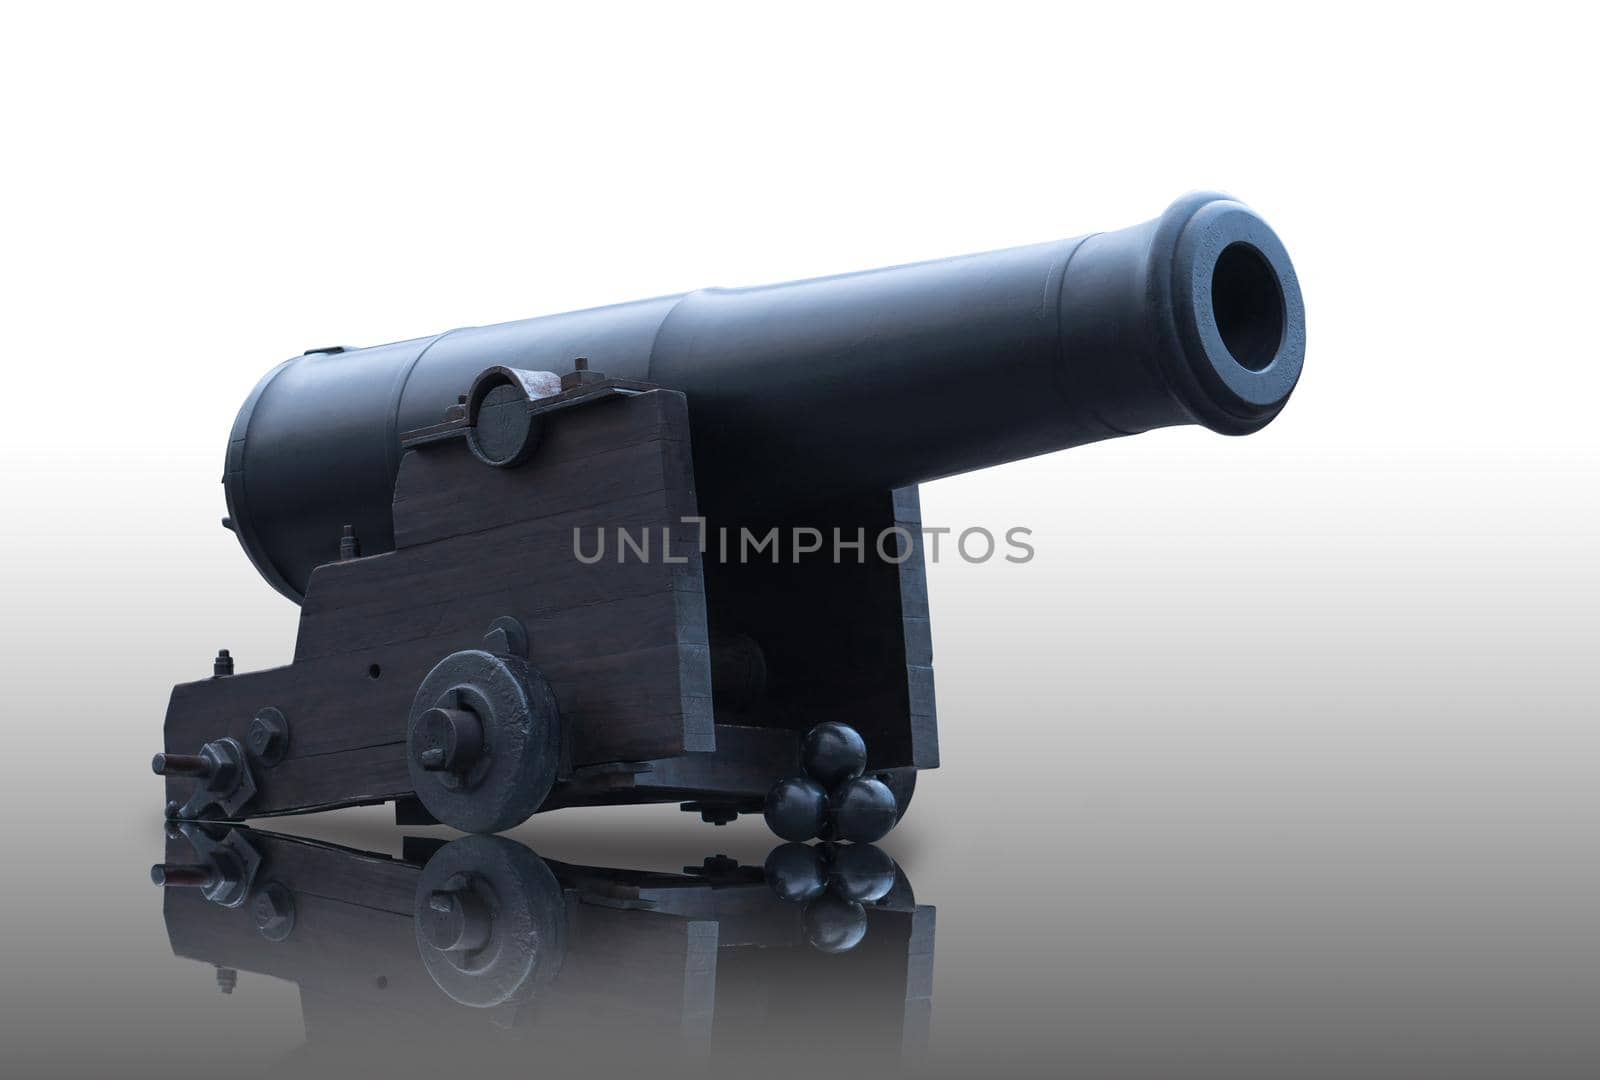 Antique artillery gun on a white background